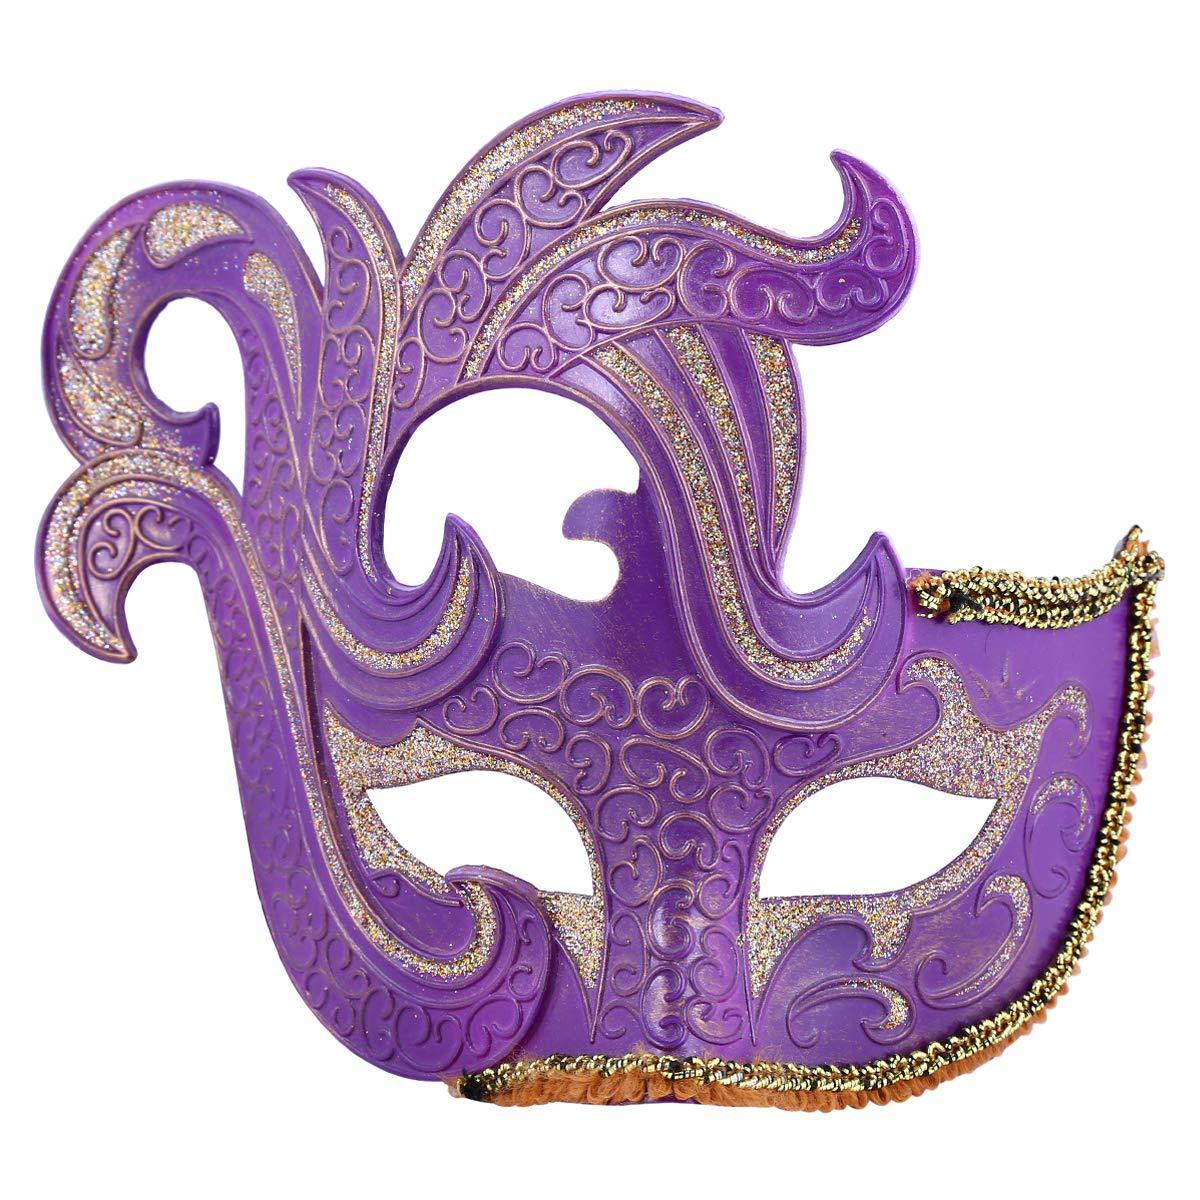 Daweigao Party Mask - M4102, Purple